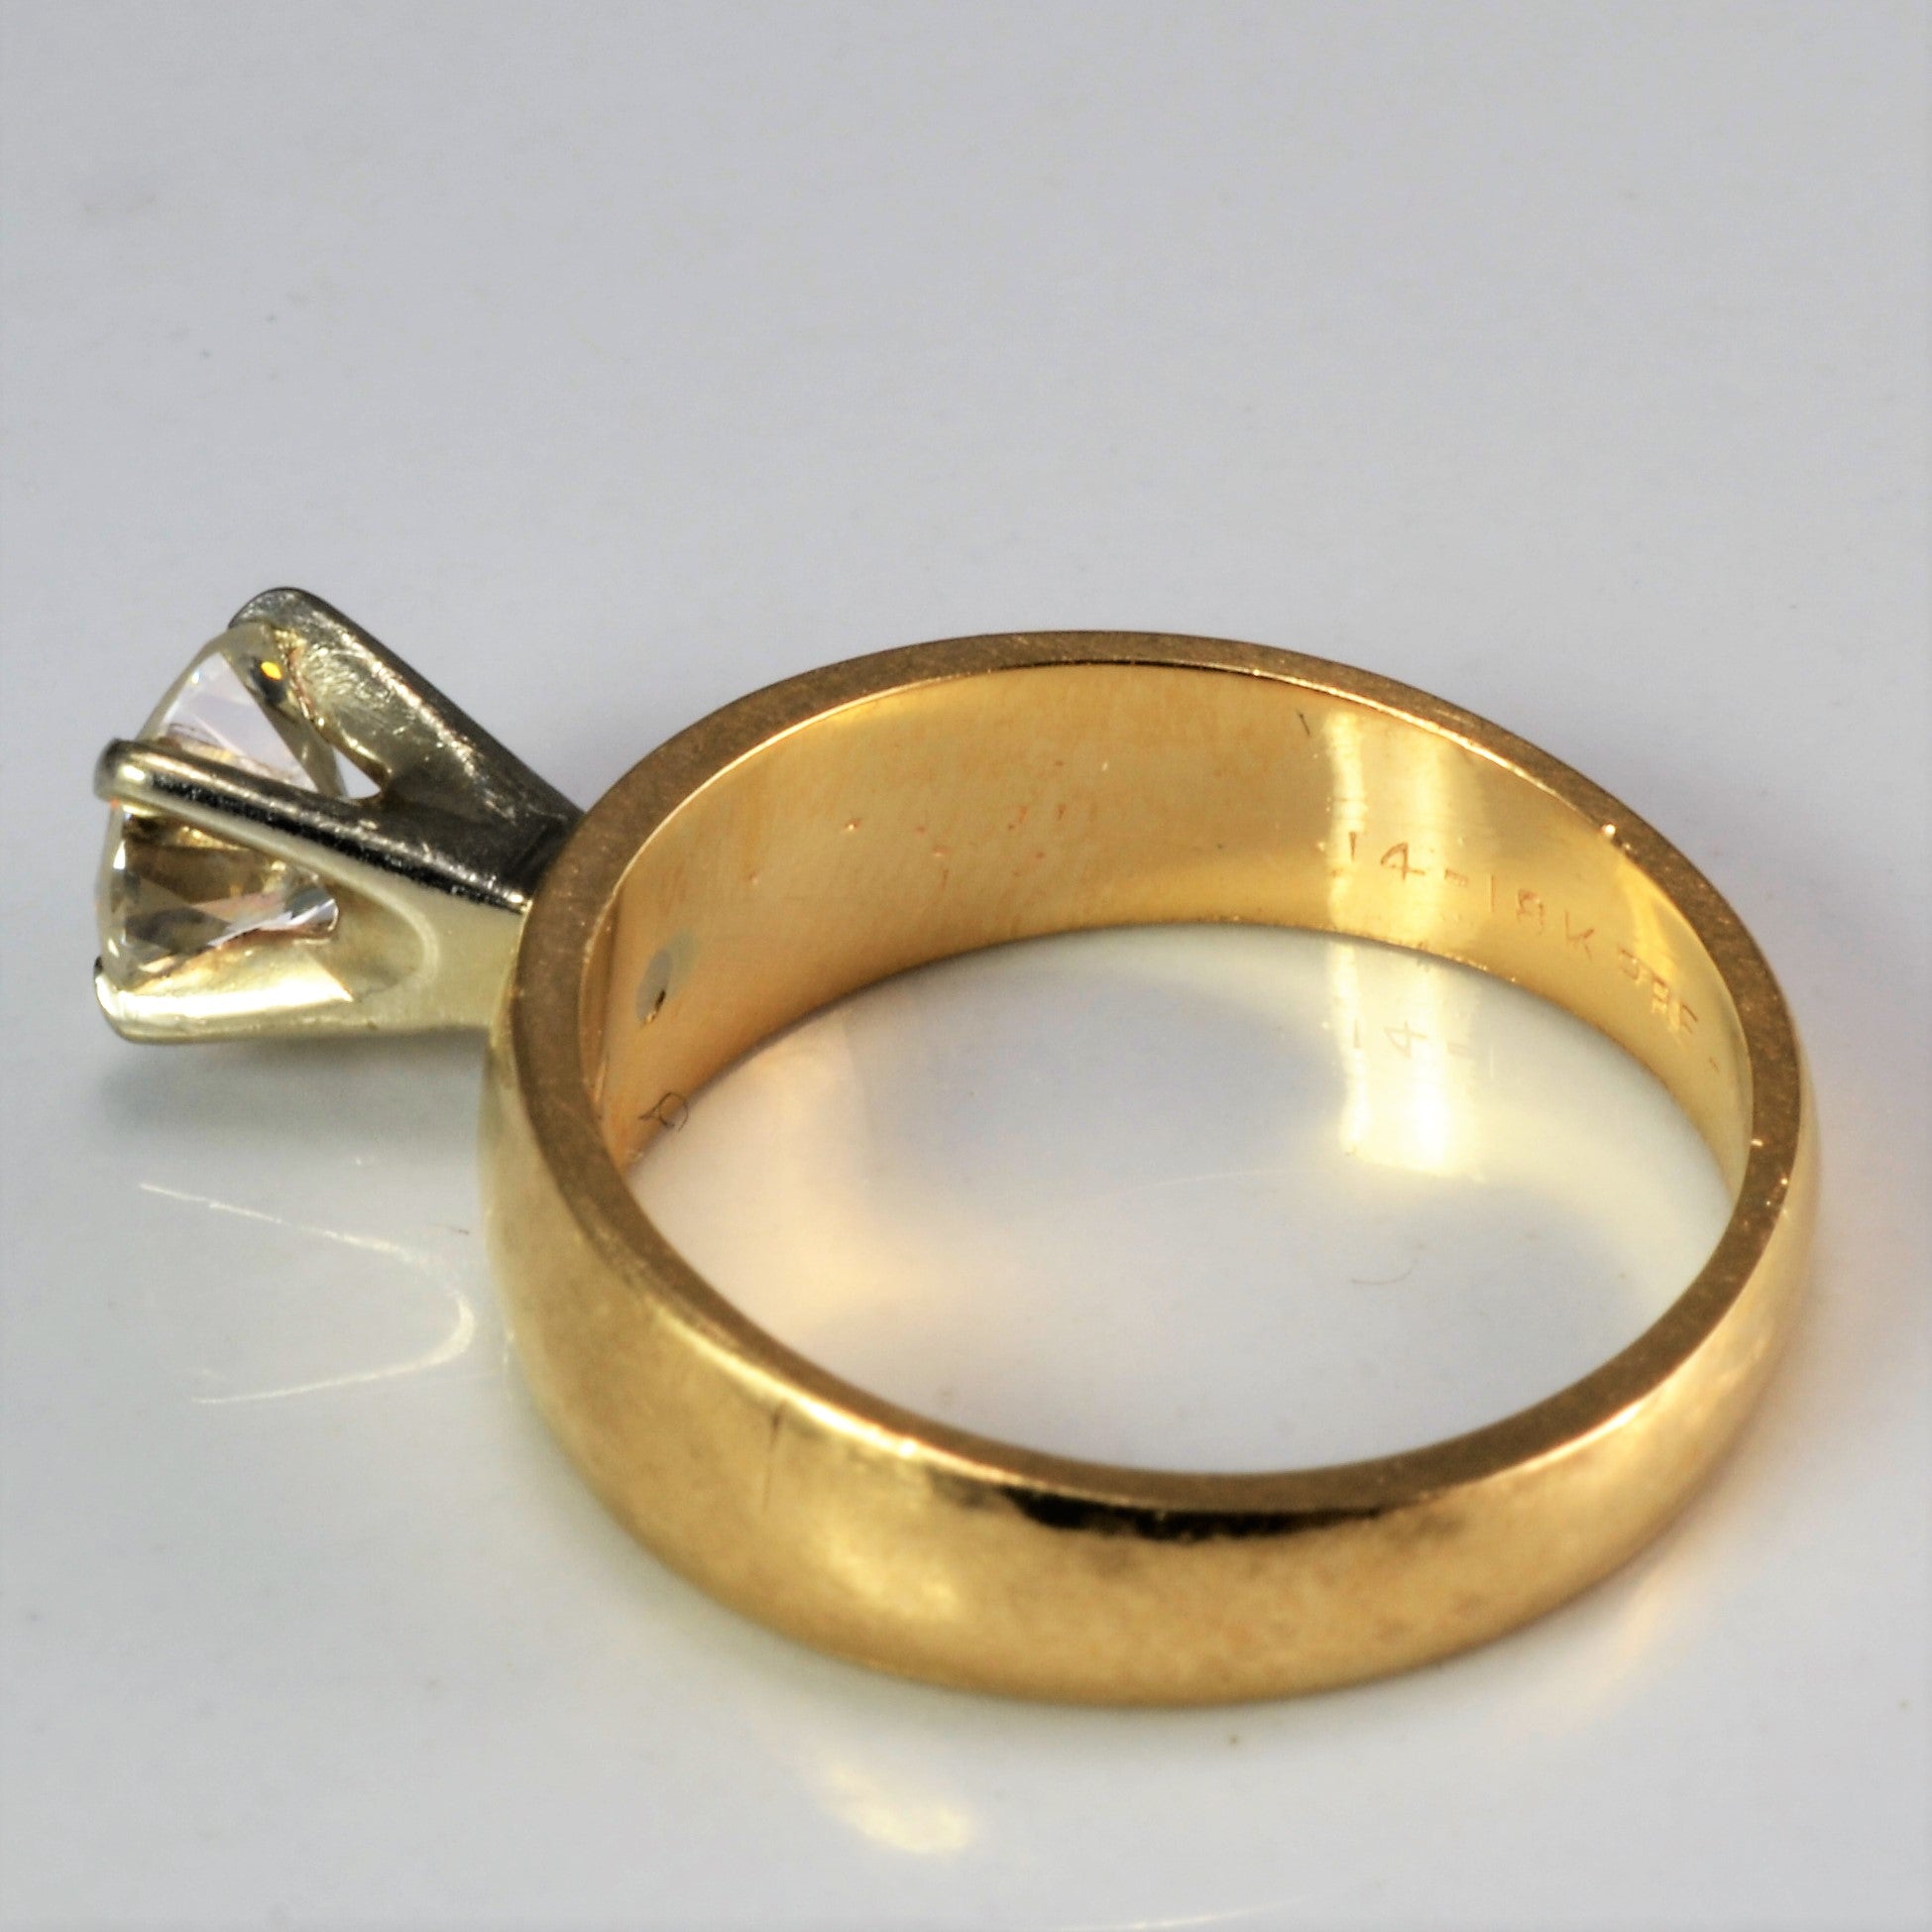 High Set Solitaire Diamond Ring | 0.64 ct, SZ 5 |